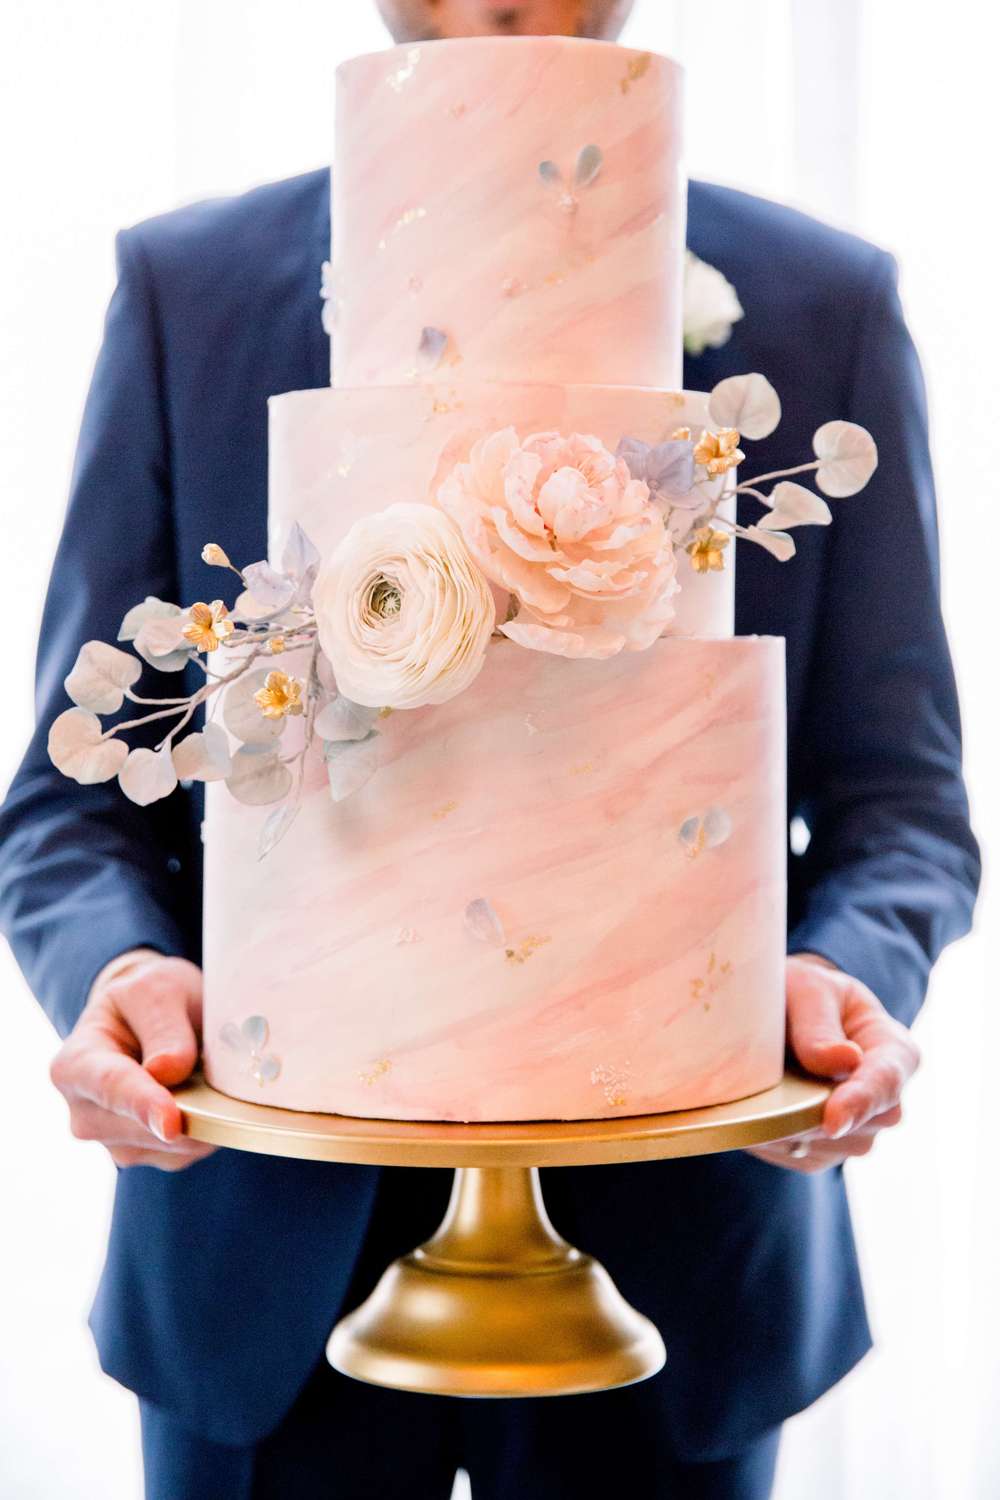 Top Paris Wedding Cake Designers for your wedding or elopement